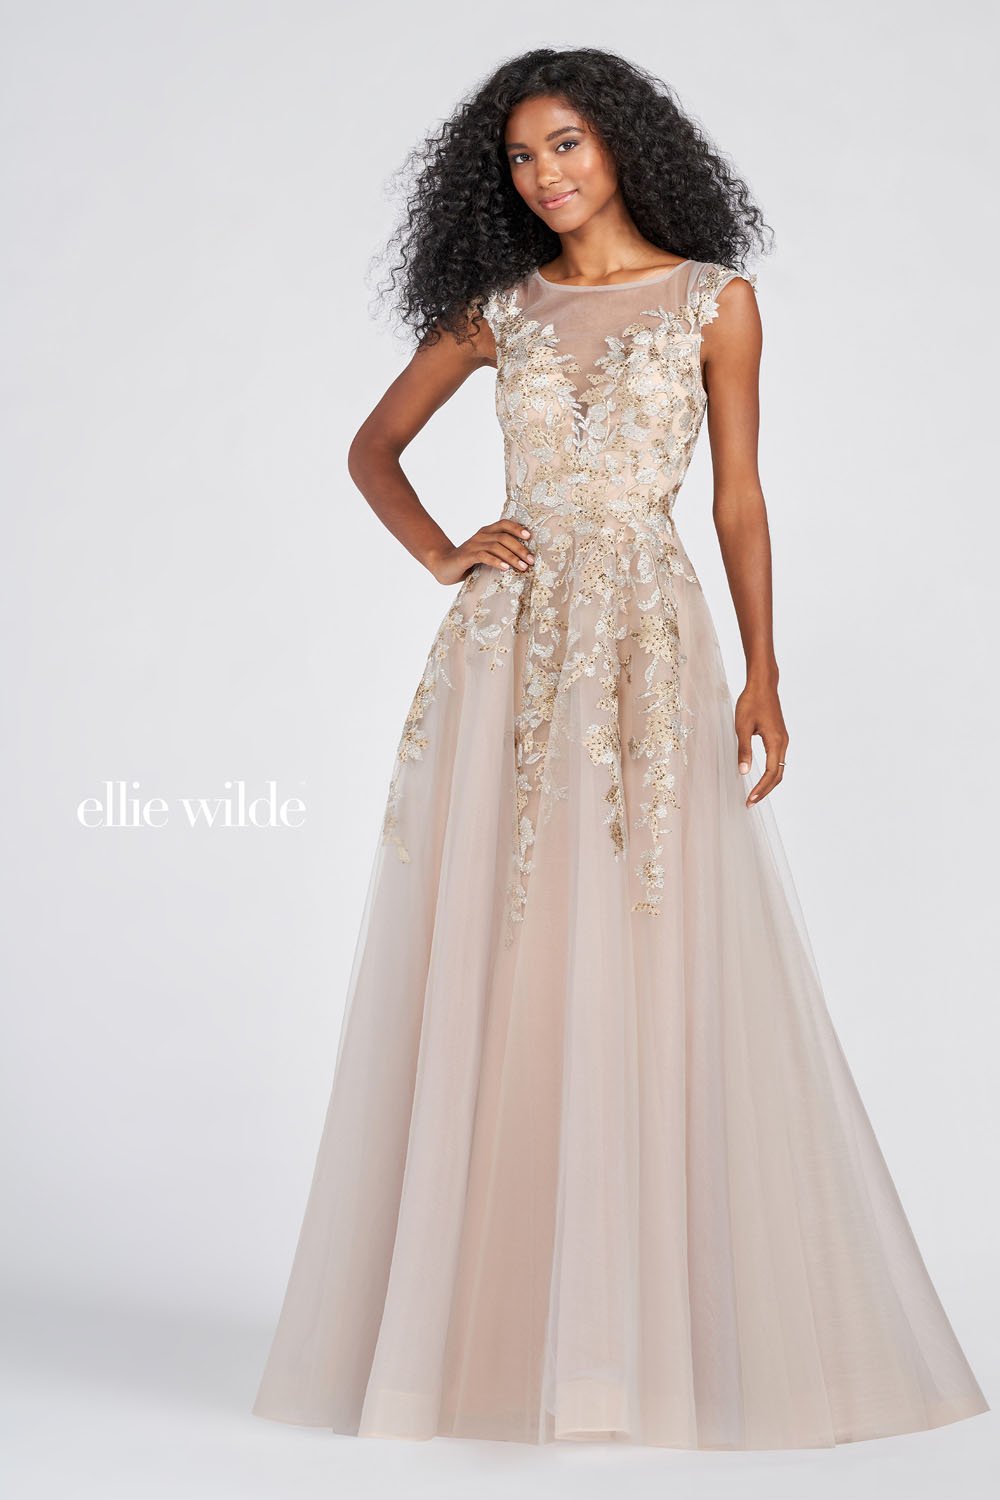 Ellie Wilde Silver Gold EW122096 Prom Dress Image.  Silver Gold formal dress.